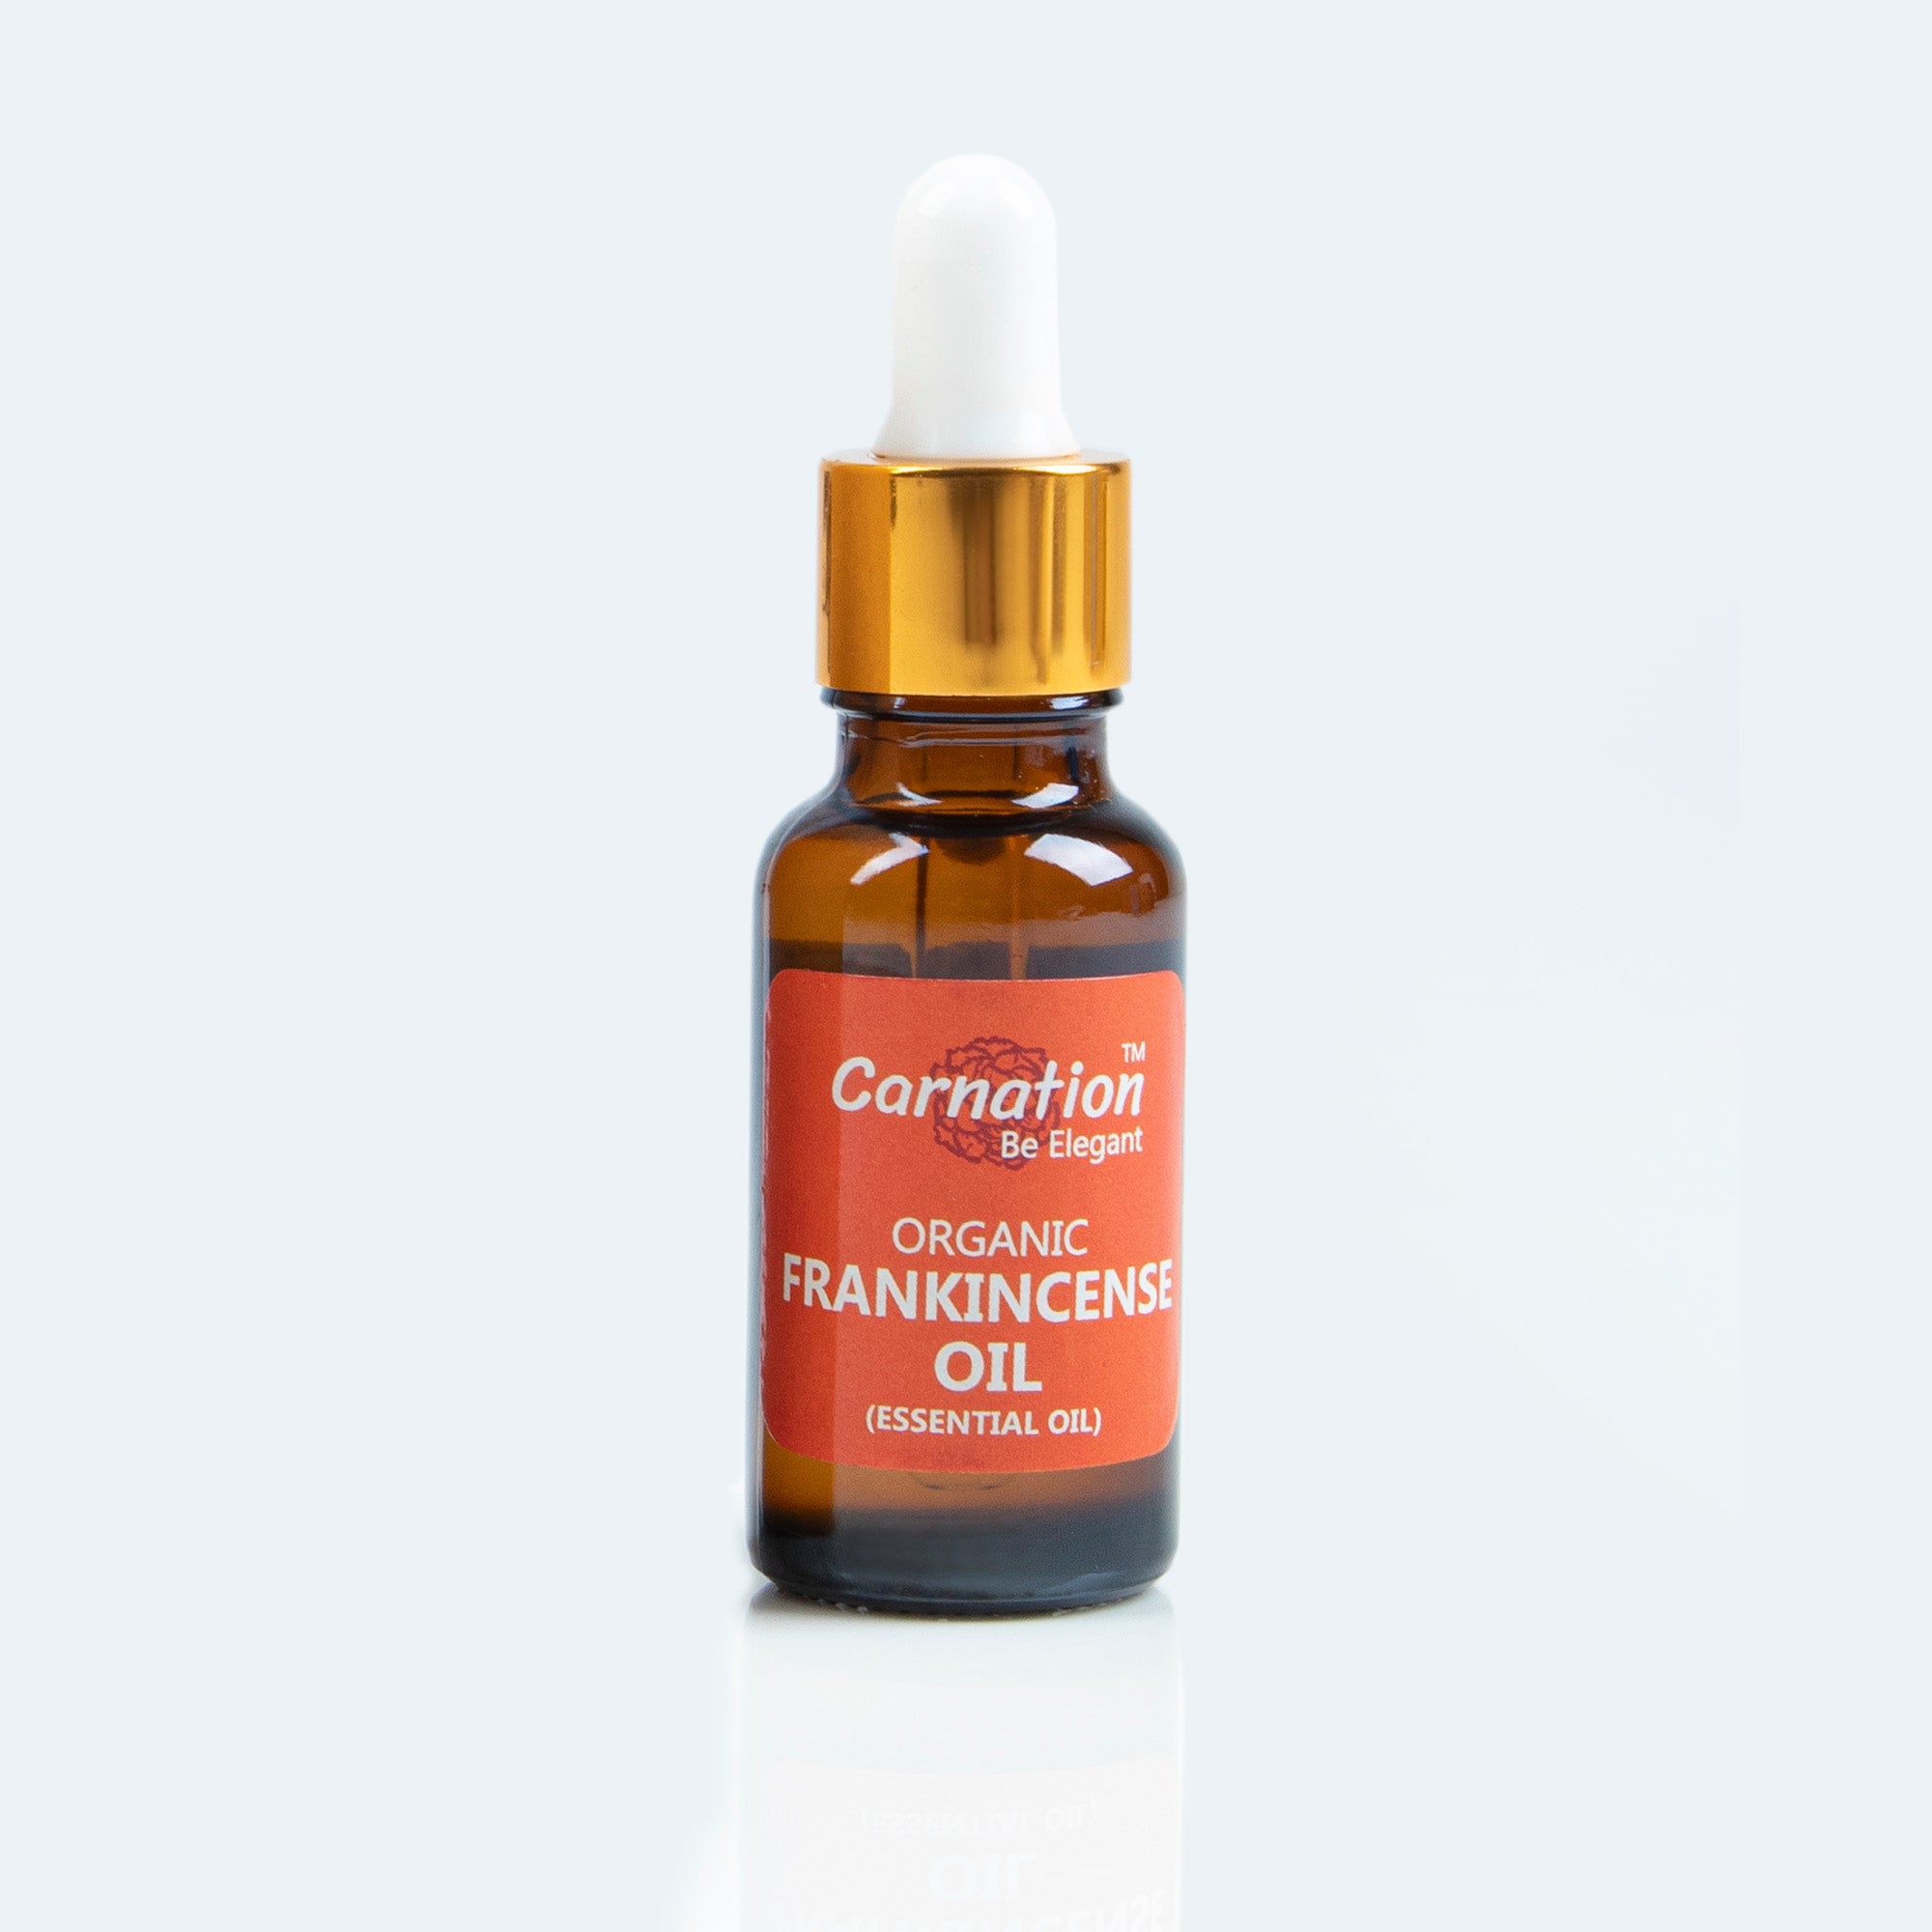 frankincense oil uses